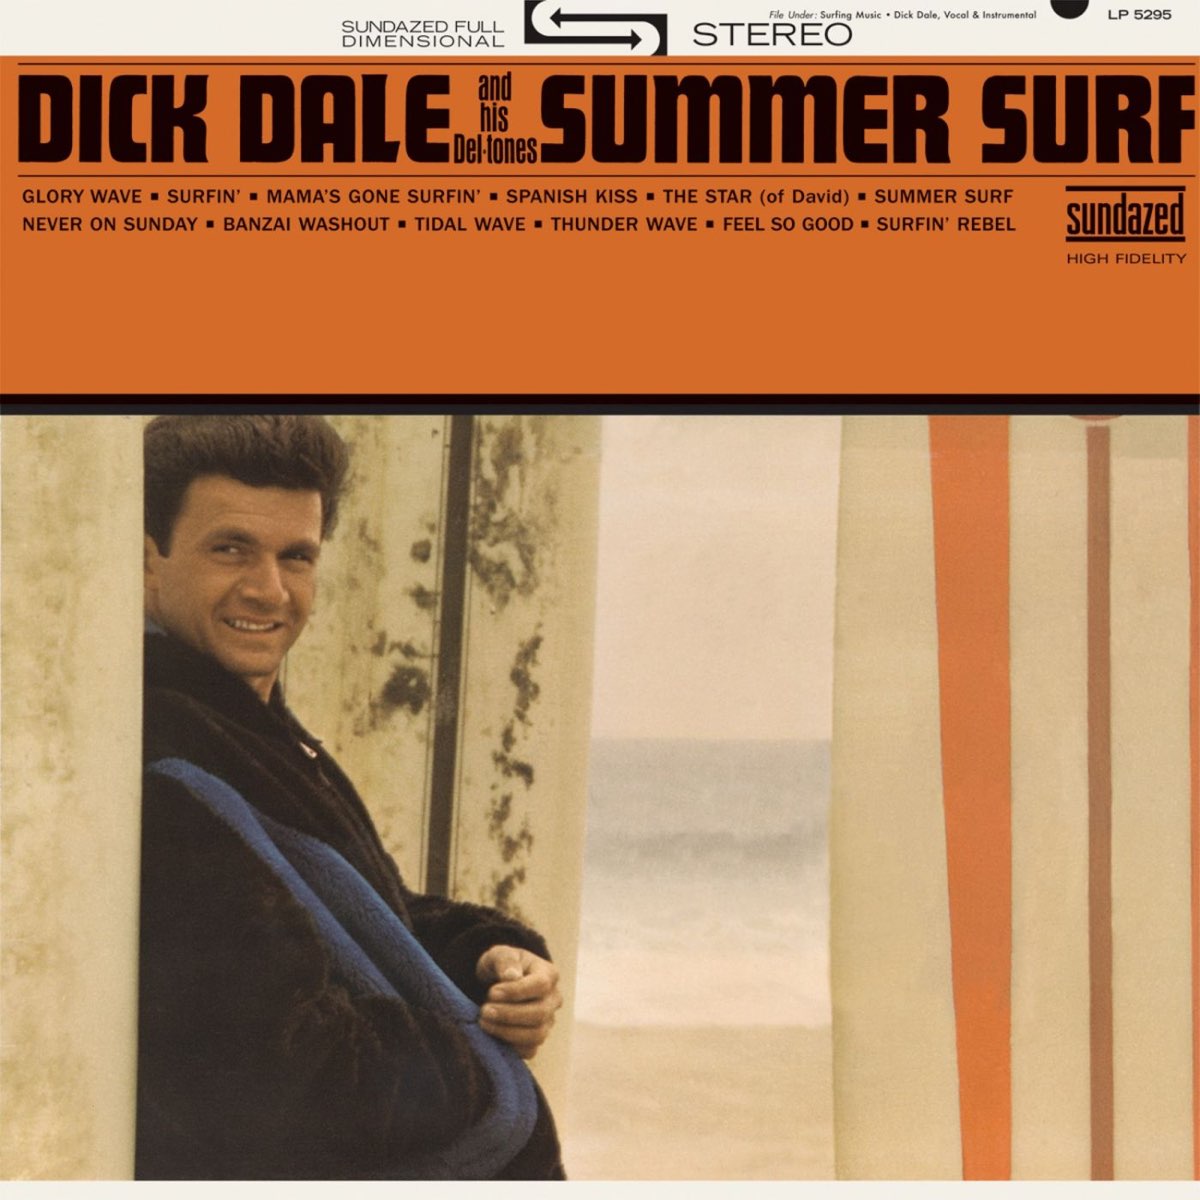 Dick Dale - Summer Surf